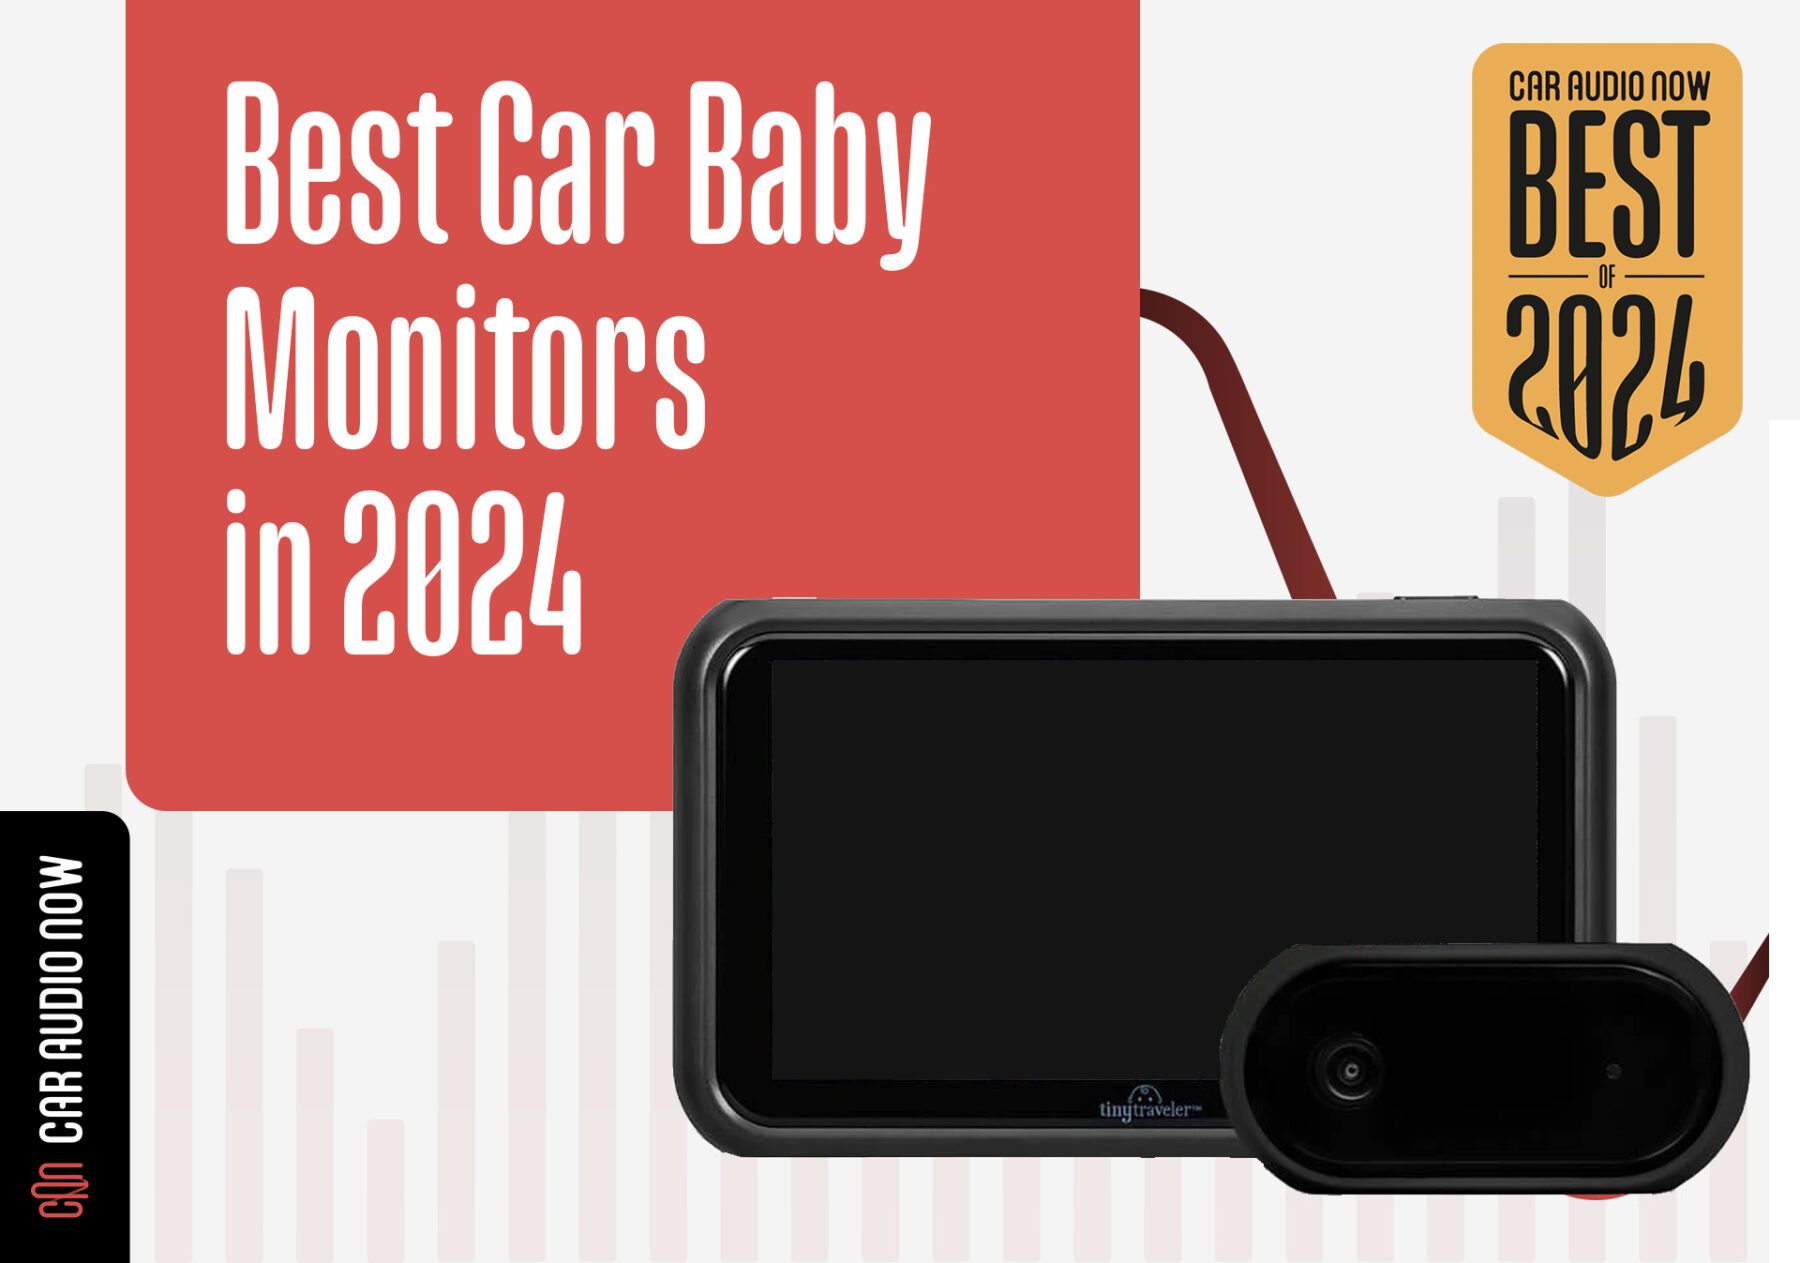 Best Car Baby Monitors 2024 Hero